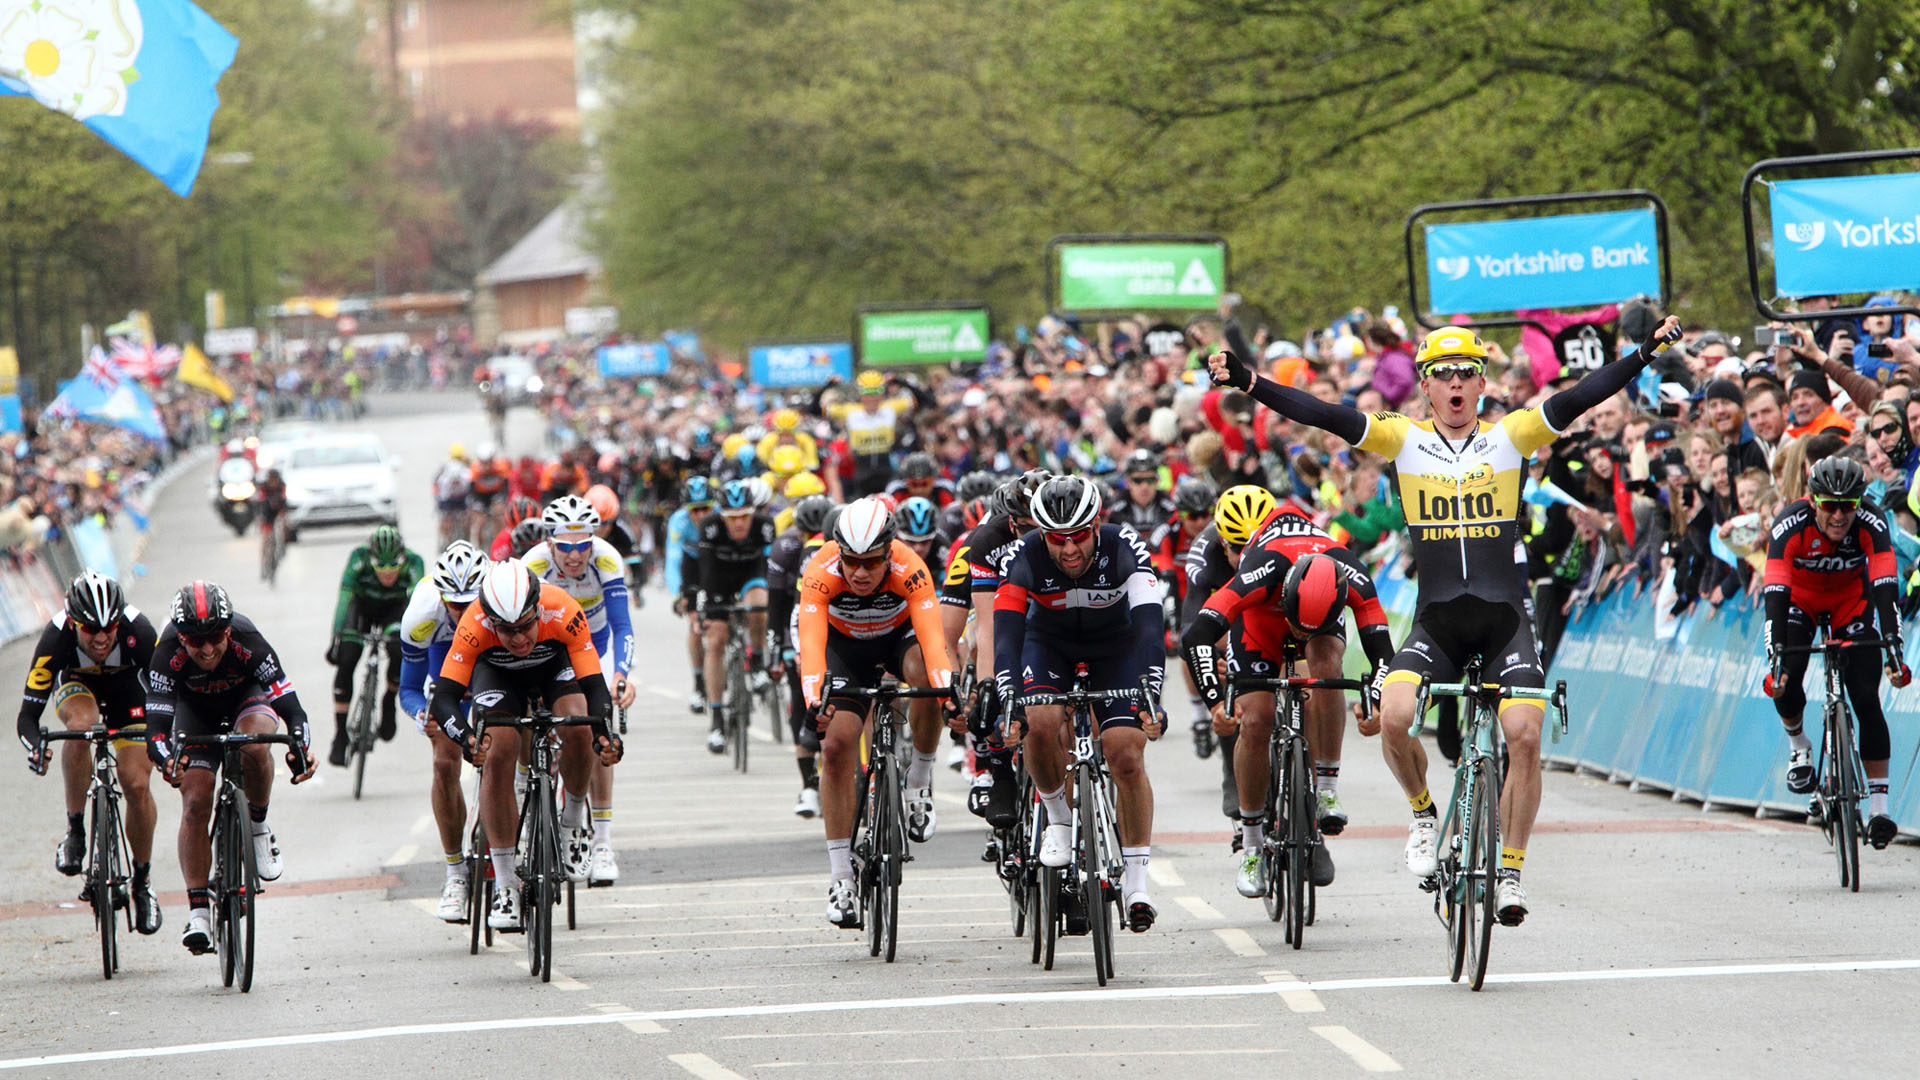 Tour De Yorkshire 2015 | Stage 2 Results